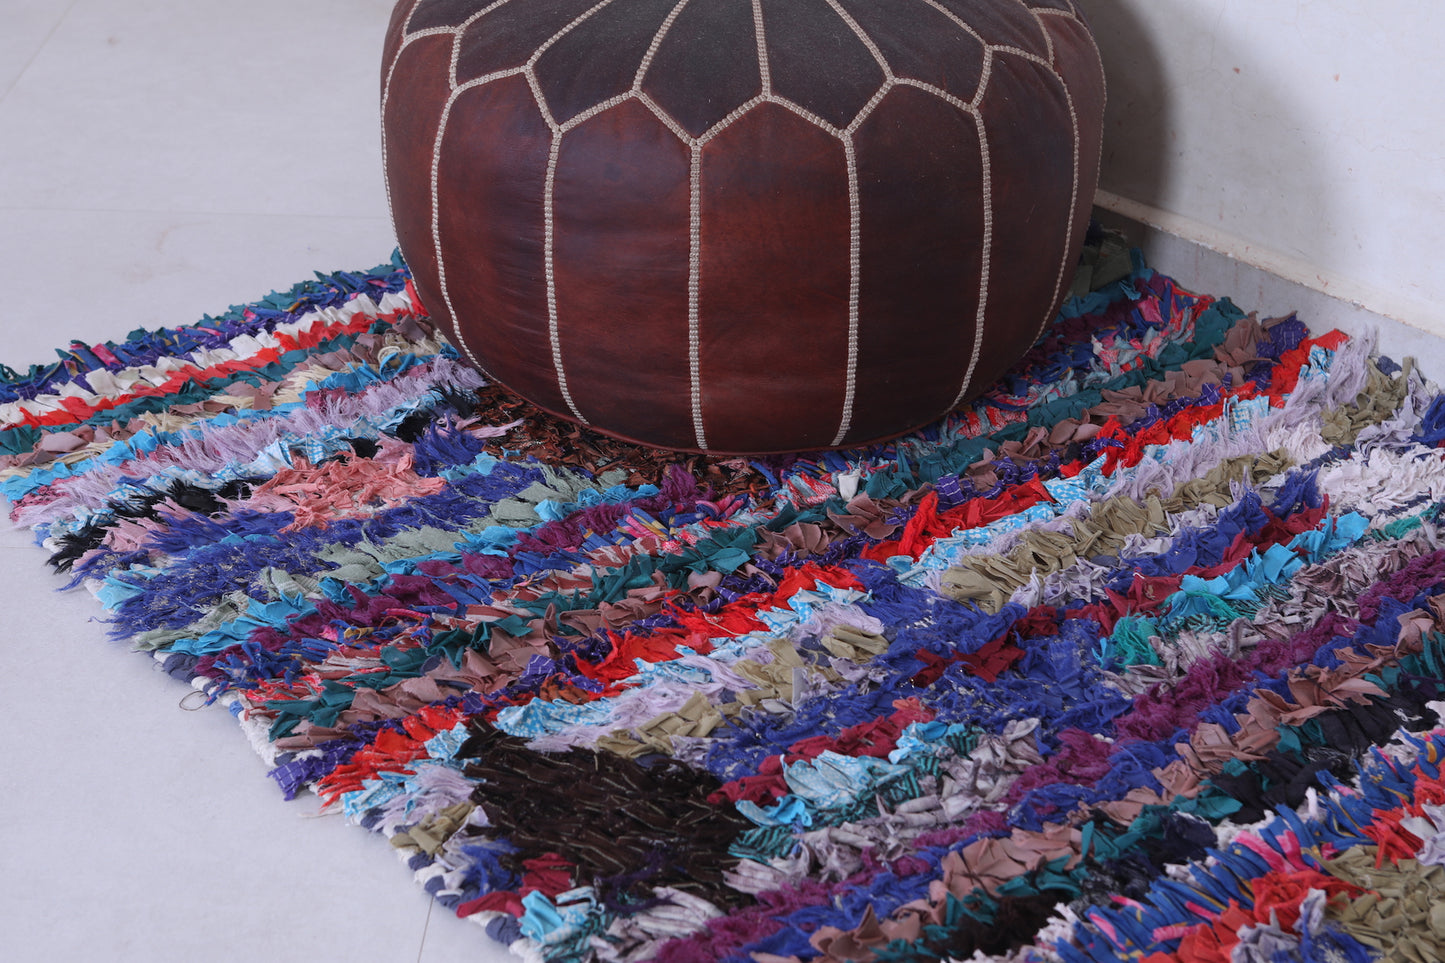 Shaggy Moroccan Boucherouite rug 3 X 6.7 Feet